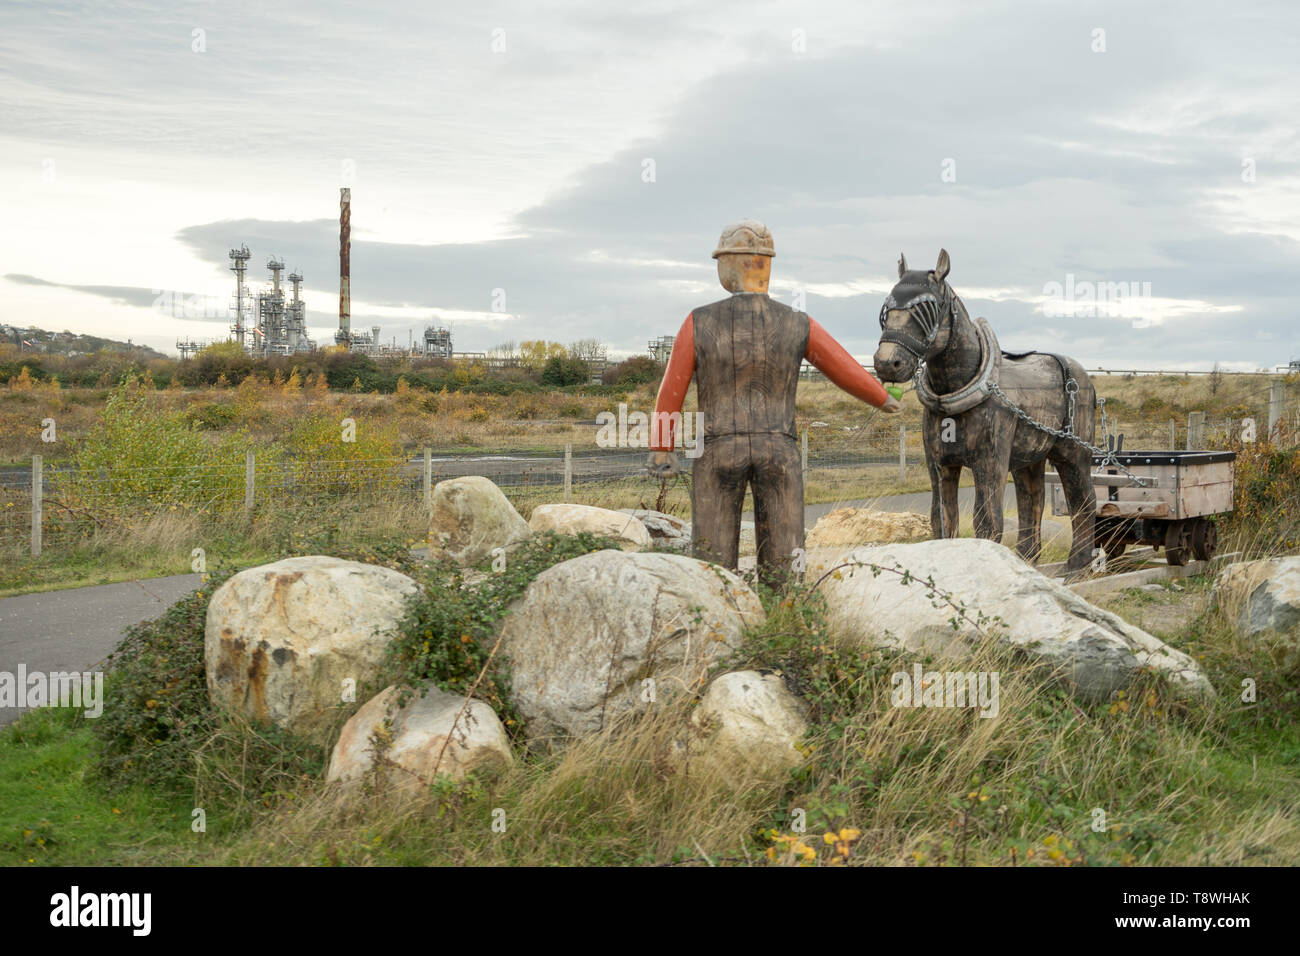 Mining, miner memorial, North Wales, UK, overlooking oil field industry Stock Photo